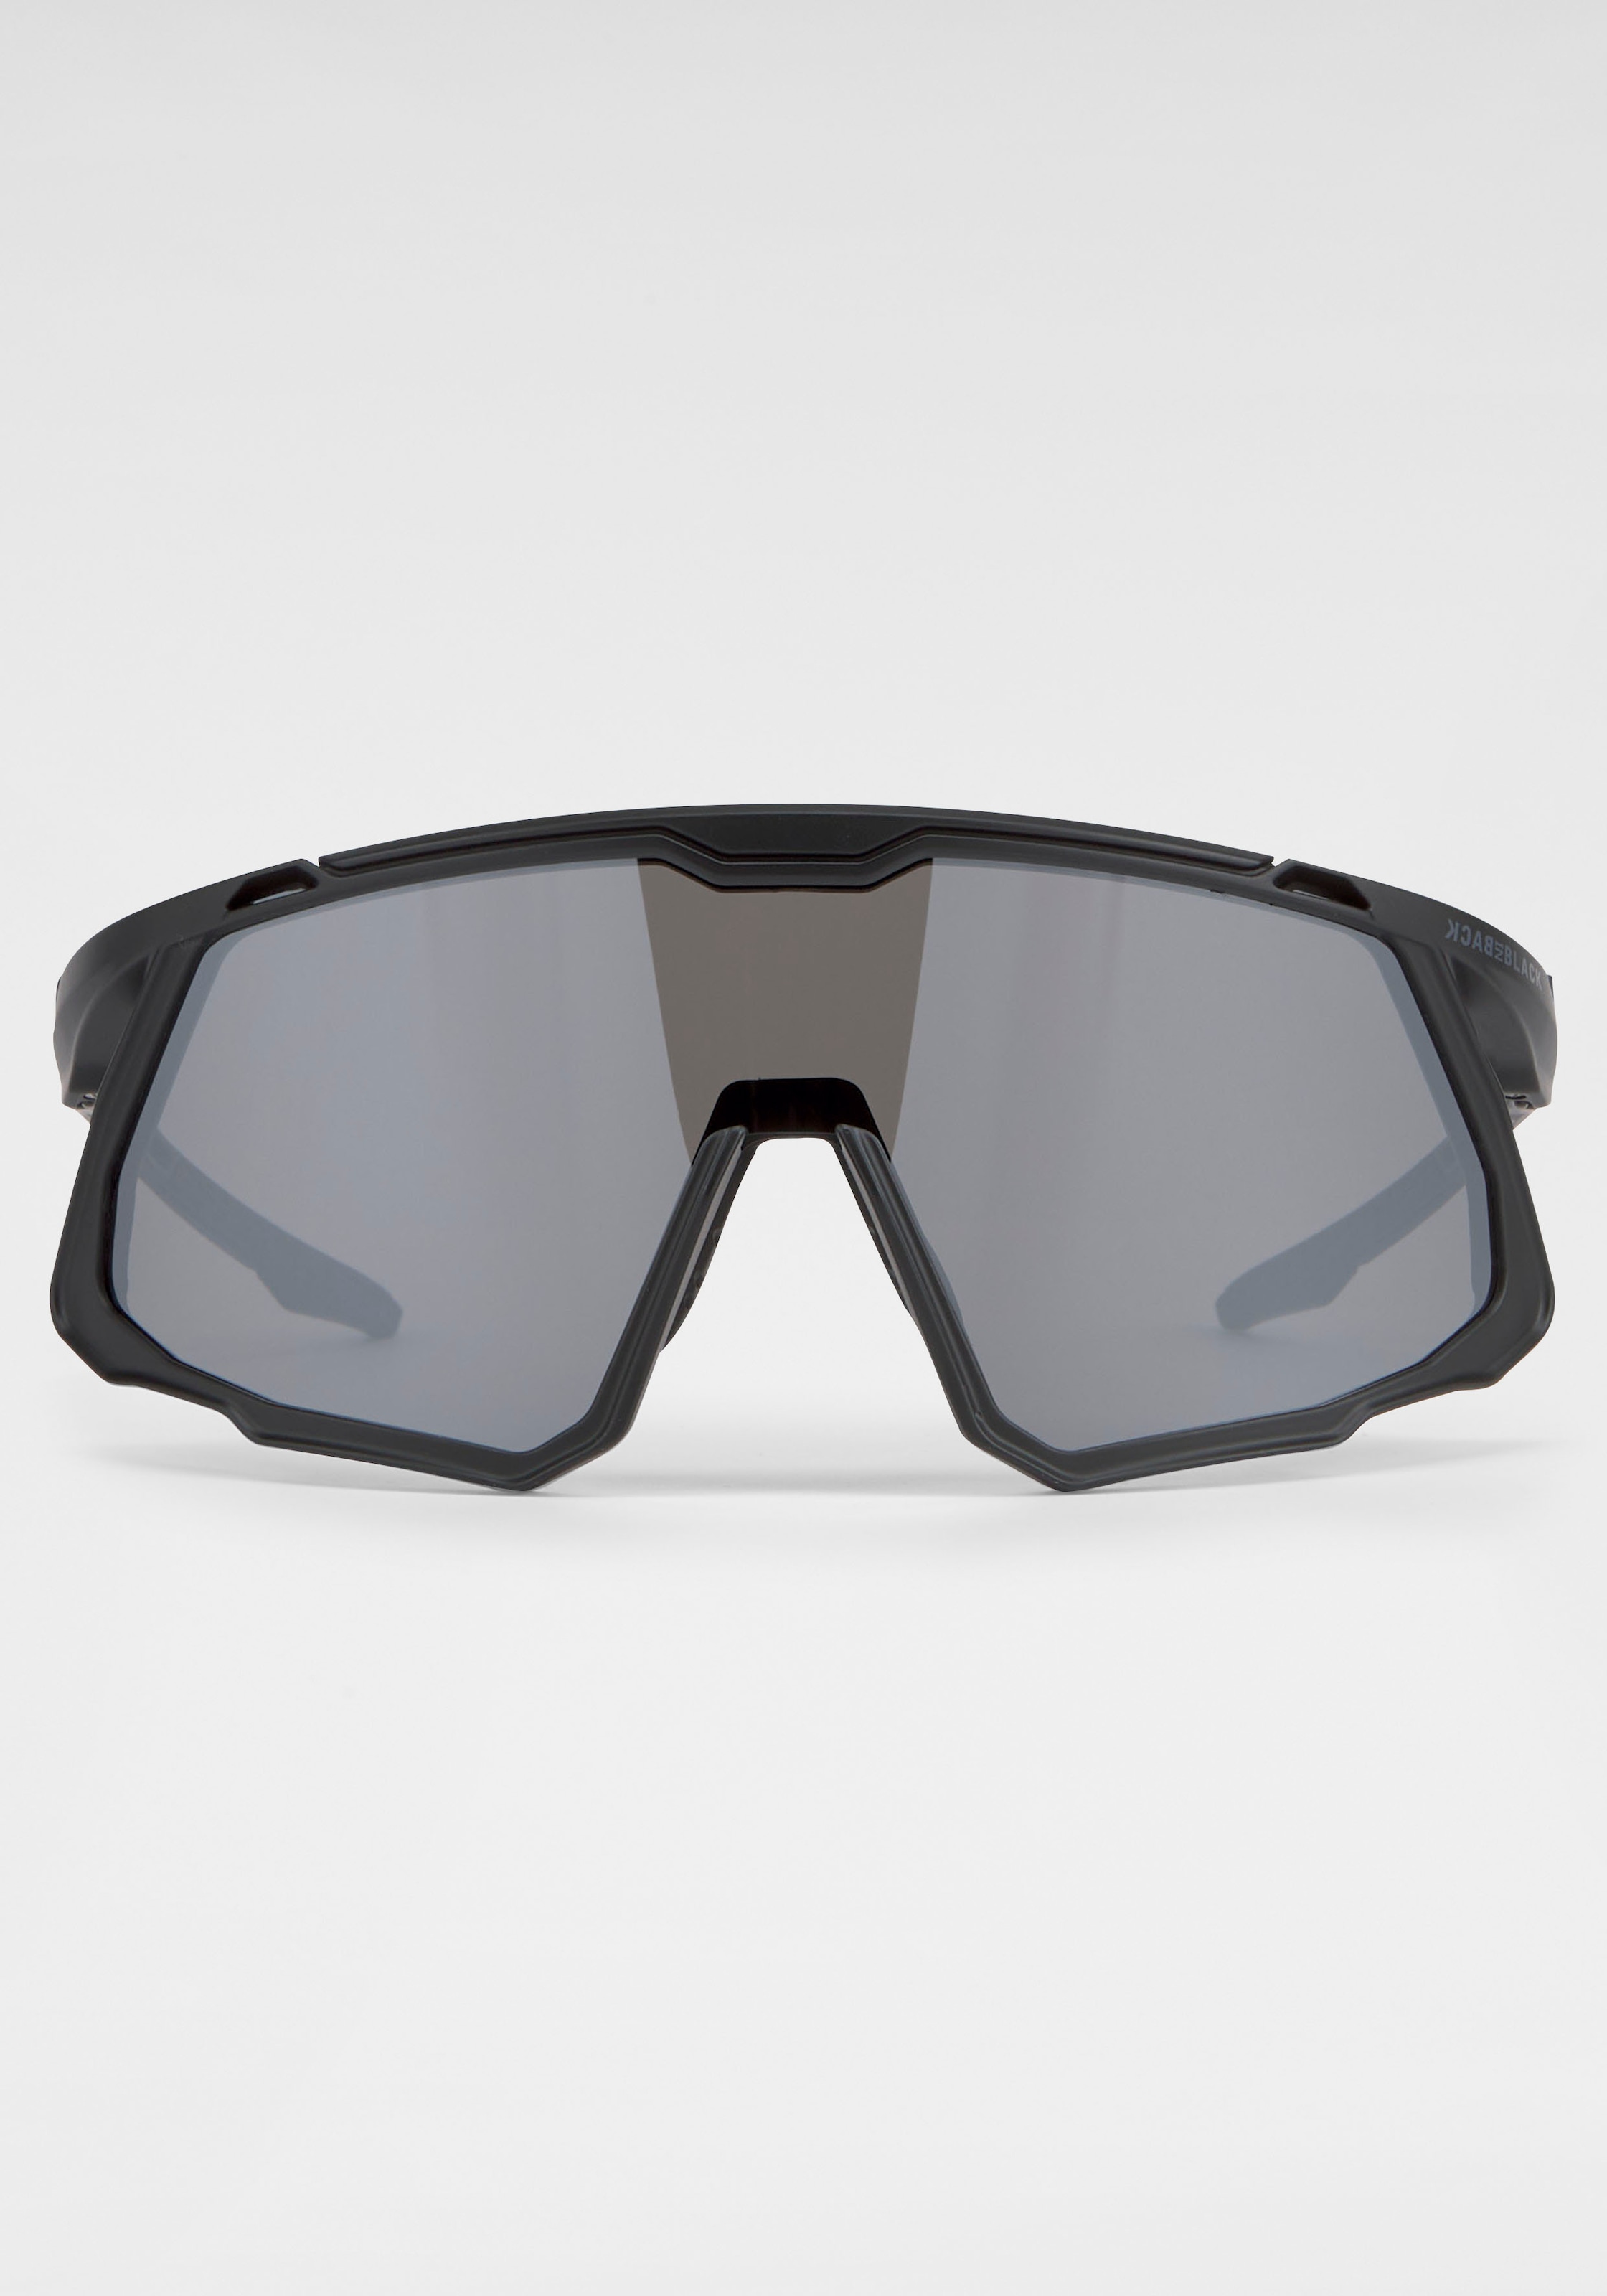 IN BACK Eyewear Sonnenbrille, Form BLACK gebogene online